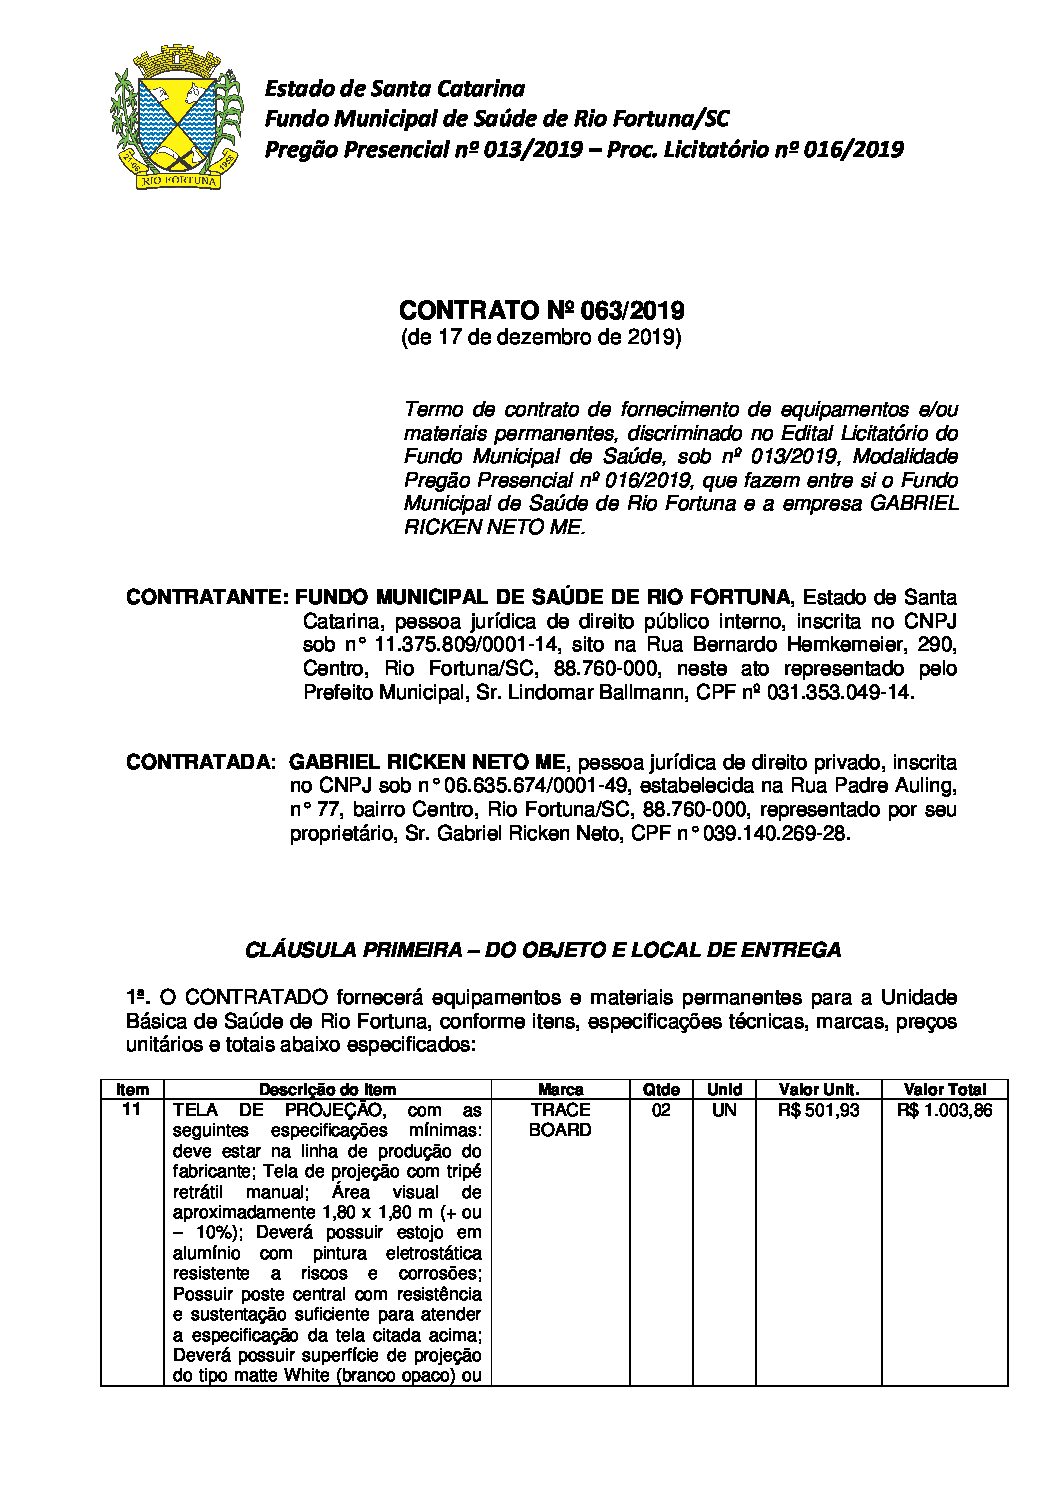 Contrato 063-2019 - Equip. e Mat. Permanente GABRIEL RICKEN NETO